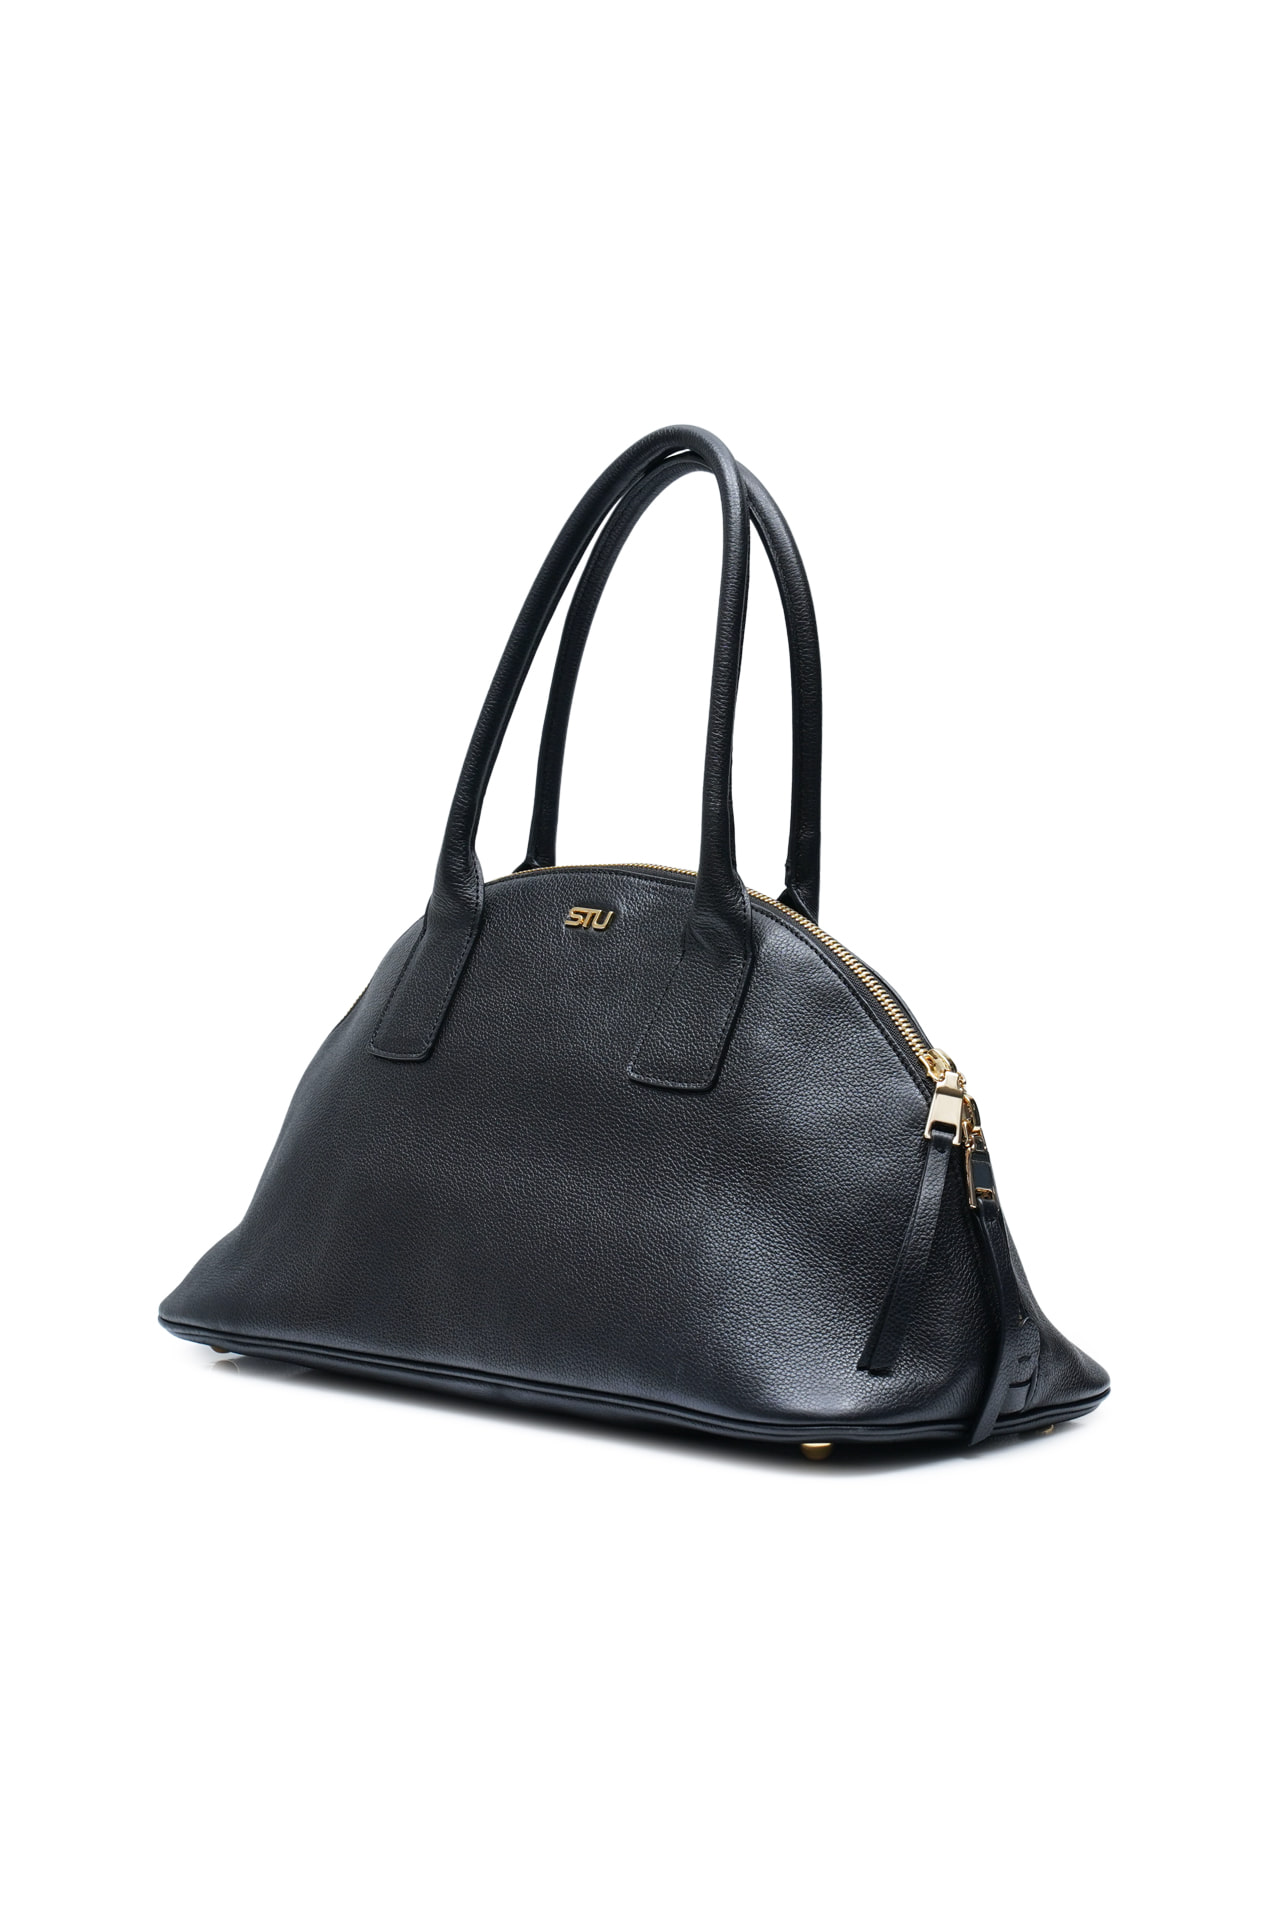 Top Handle Leather Bag Black